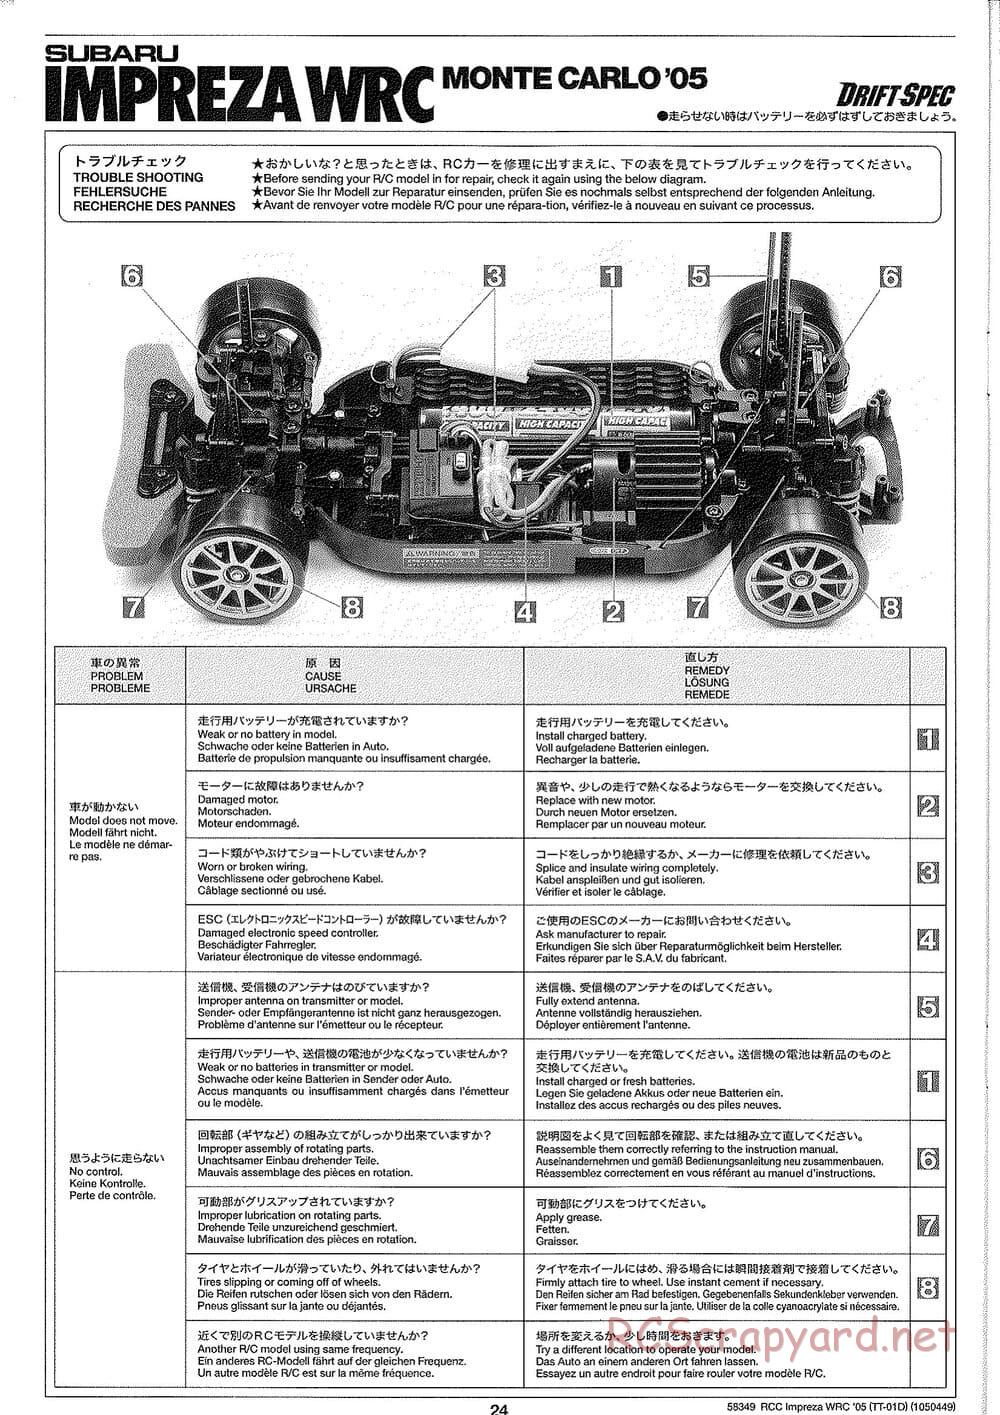 Tamiya - Subaru Impreza WRC Monte Carlo 05 - Drift Spec - TT-01D Chassis - Manual - Page 24